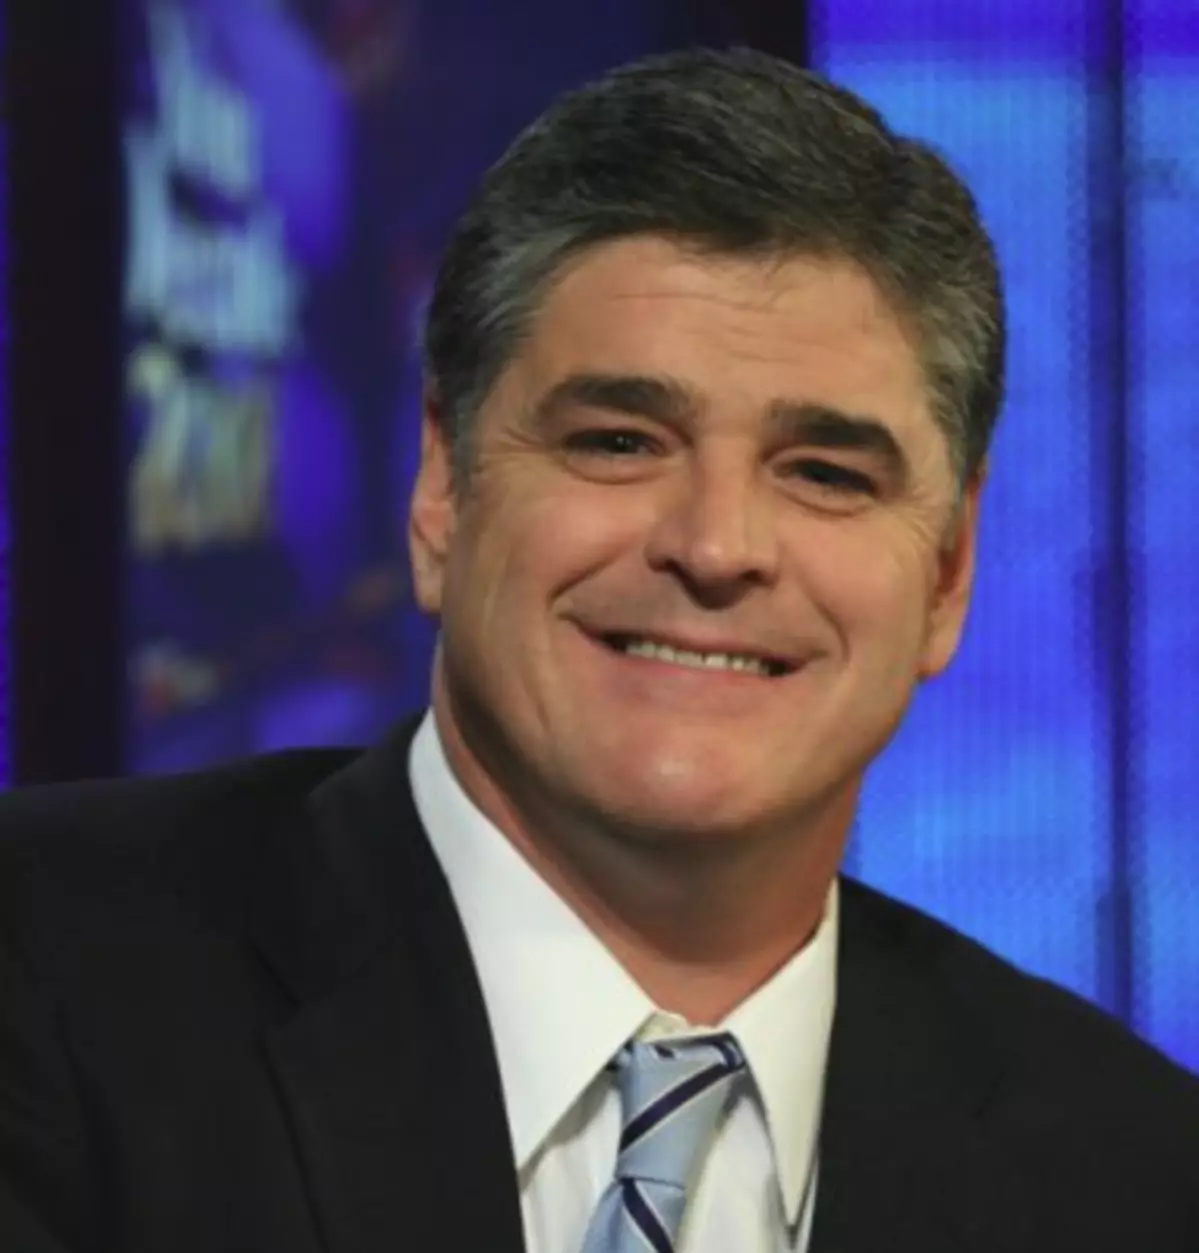 Sean Hannity Show - LIVE STREAM